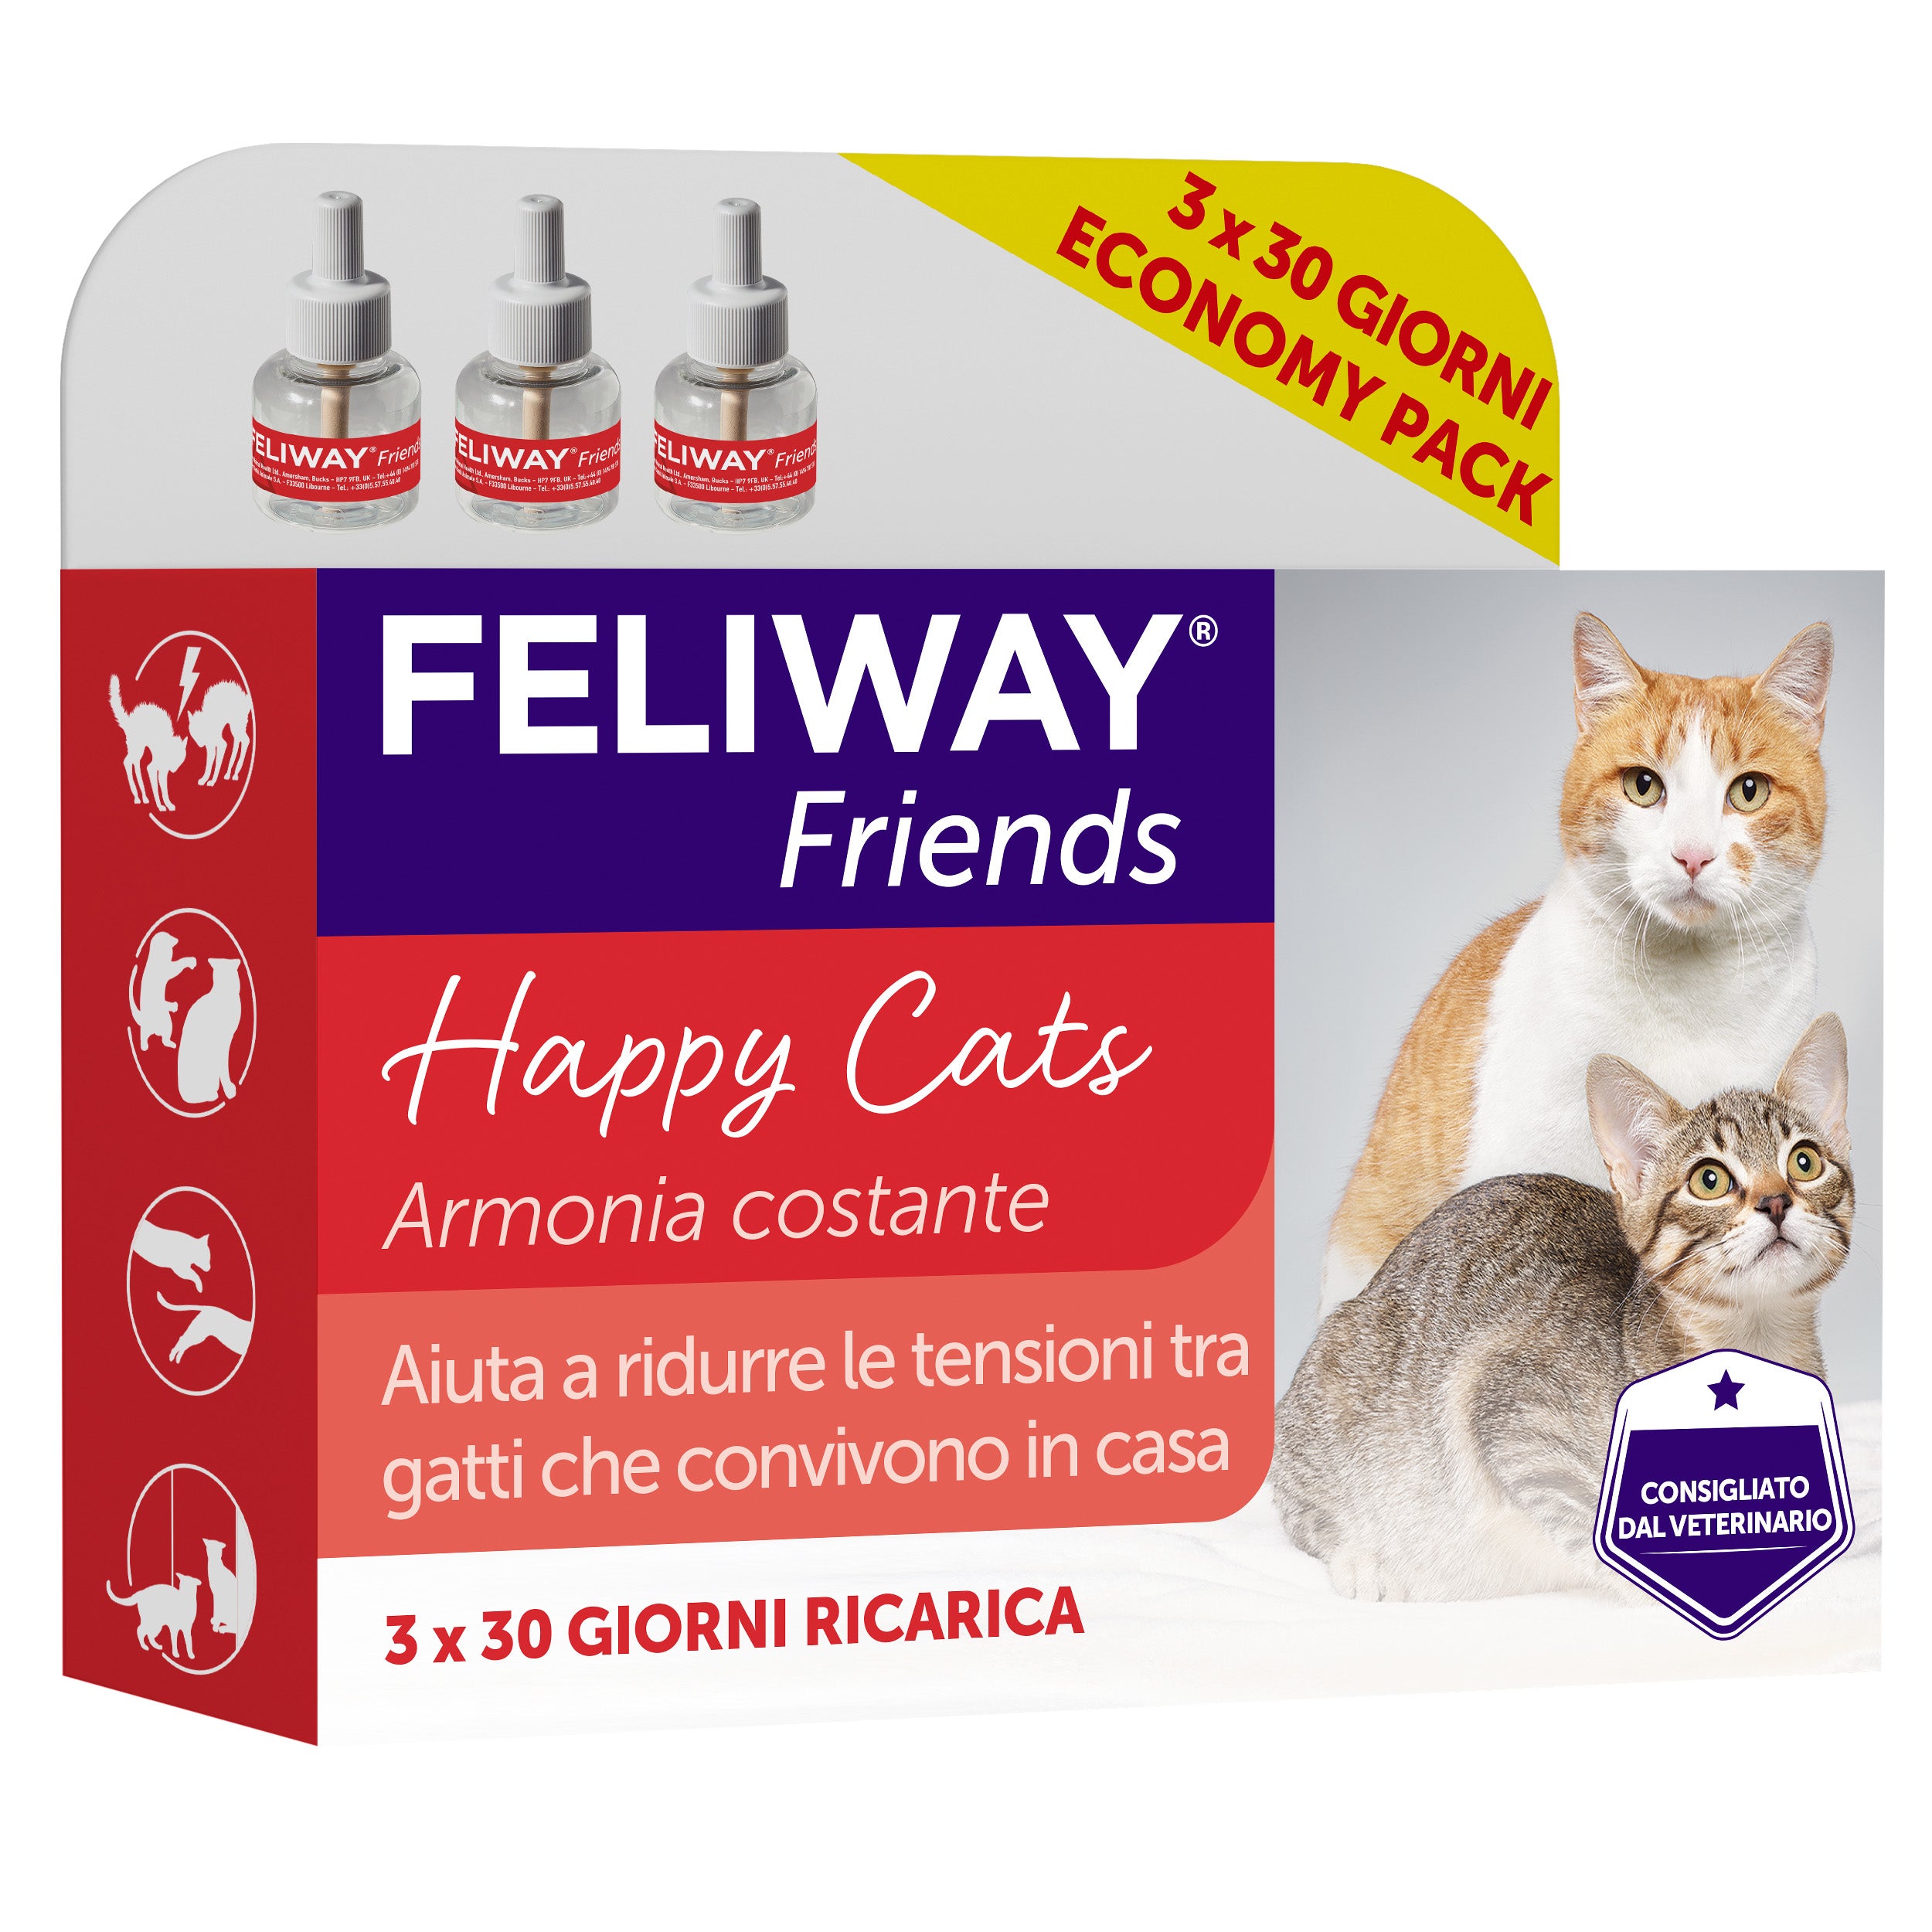 Feliway (CEVA Tiergesundheit GmbH) FELIWAY Classic Transport Spray 60 ml  contre les marques de griffes & d'urine